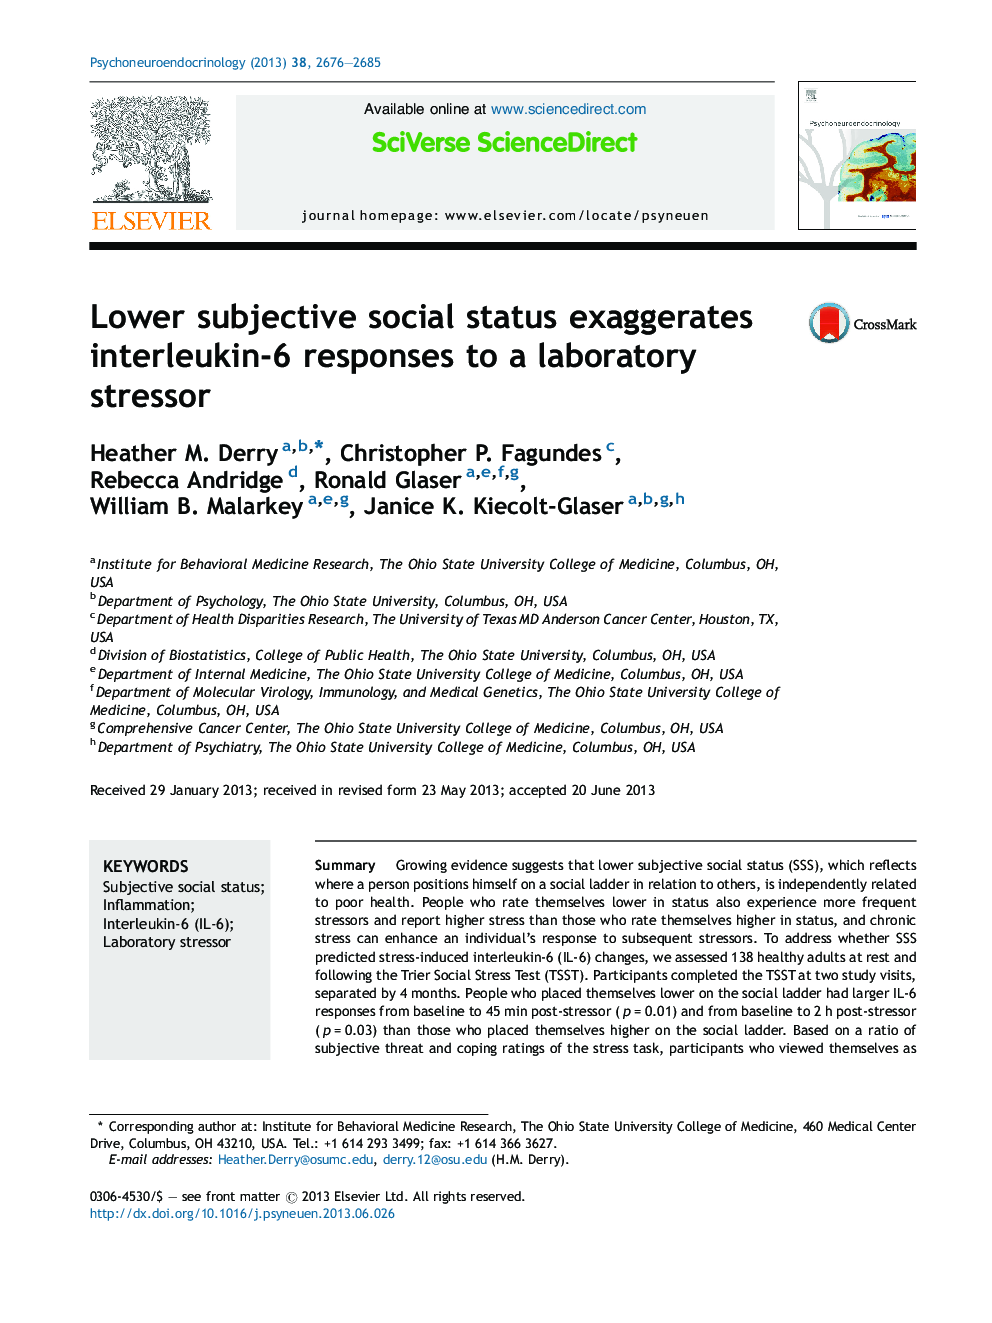 Lower subjective social status exaggerates interleukin-6 responses to a laboratory stressor